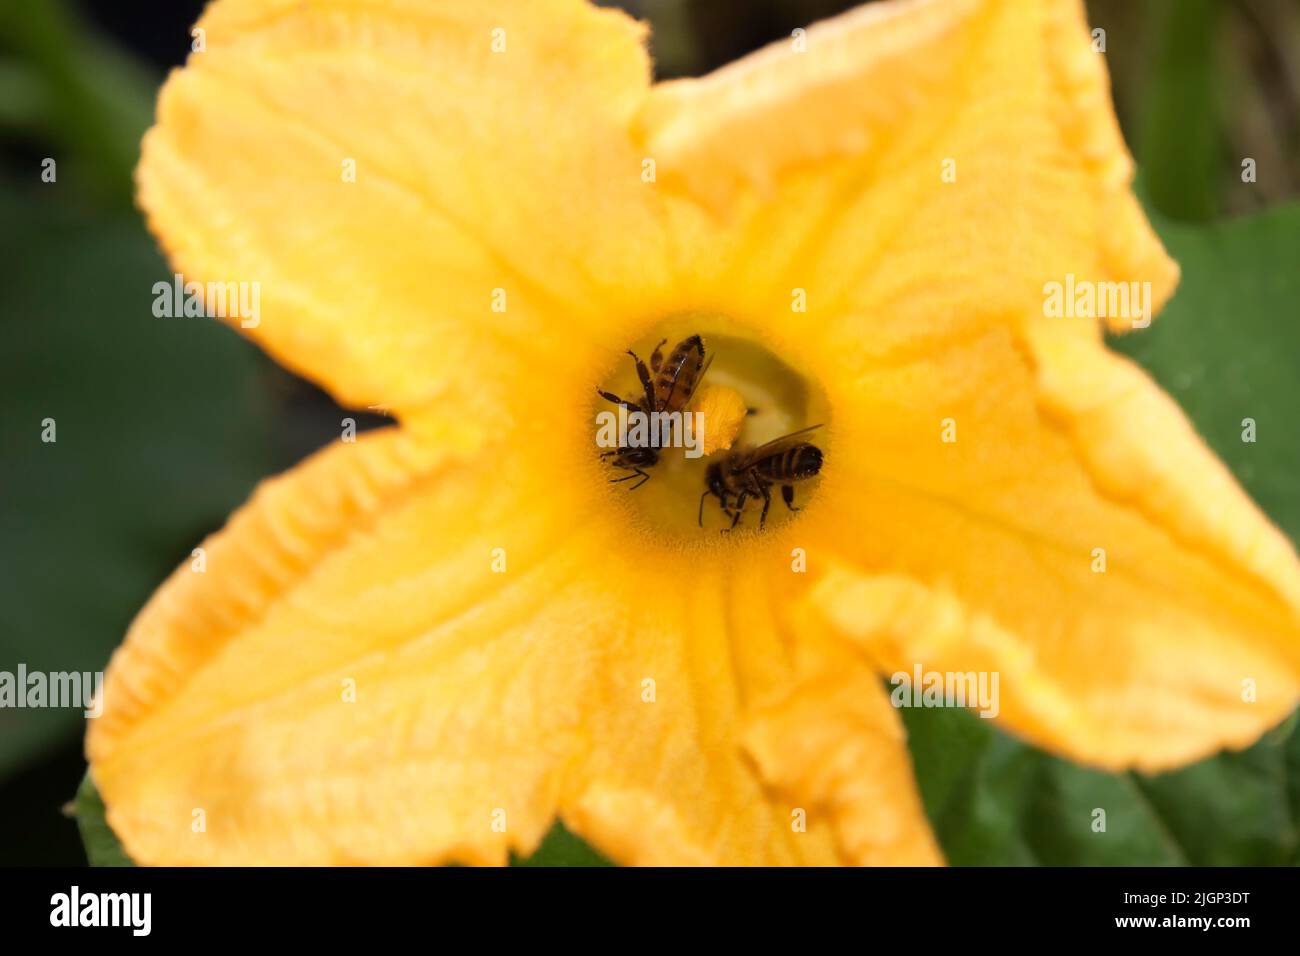 Honeybee on a pumpkin blossom Stock Photo